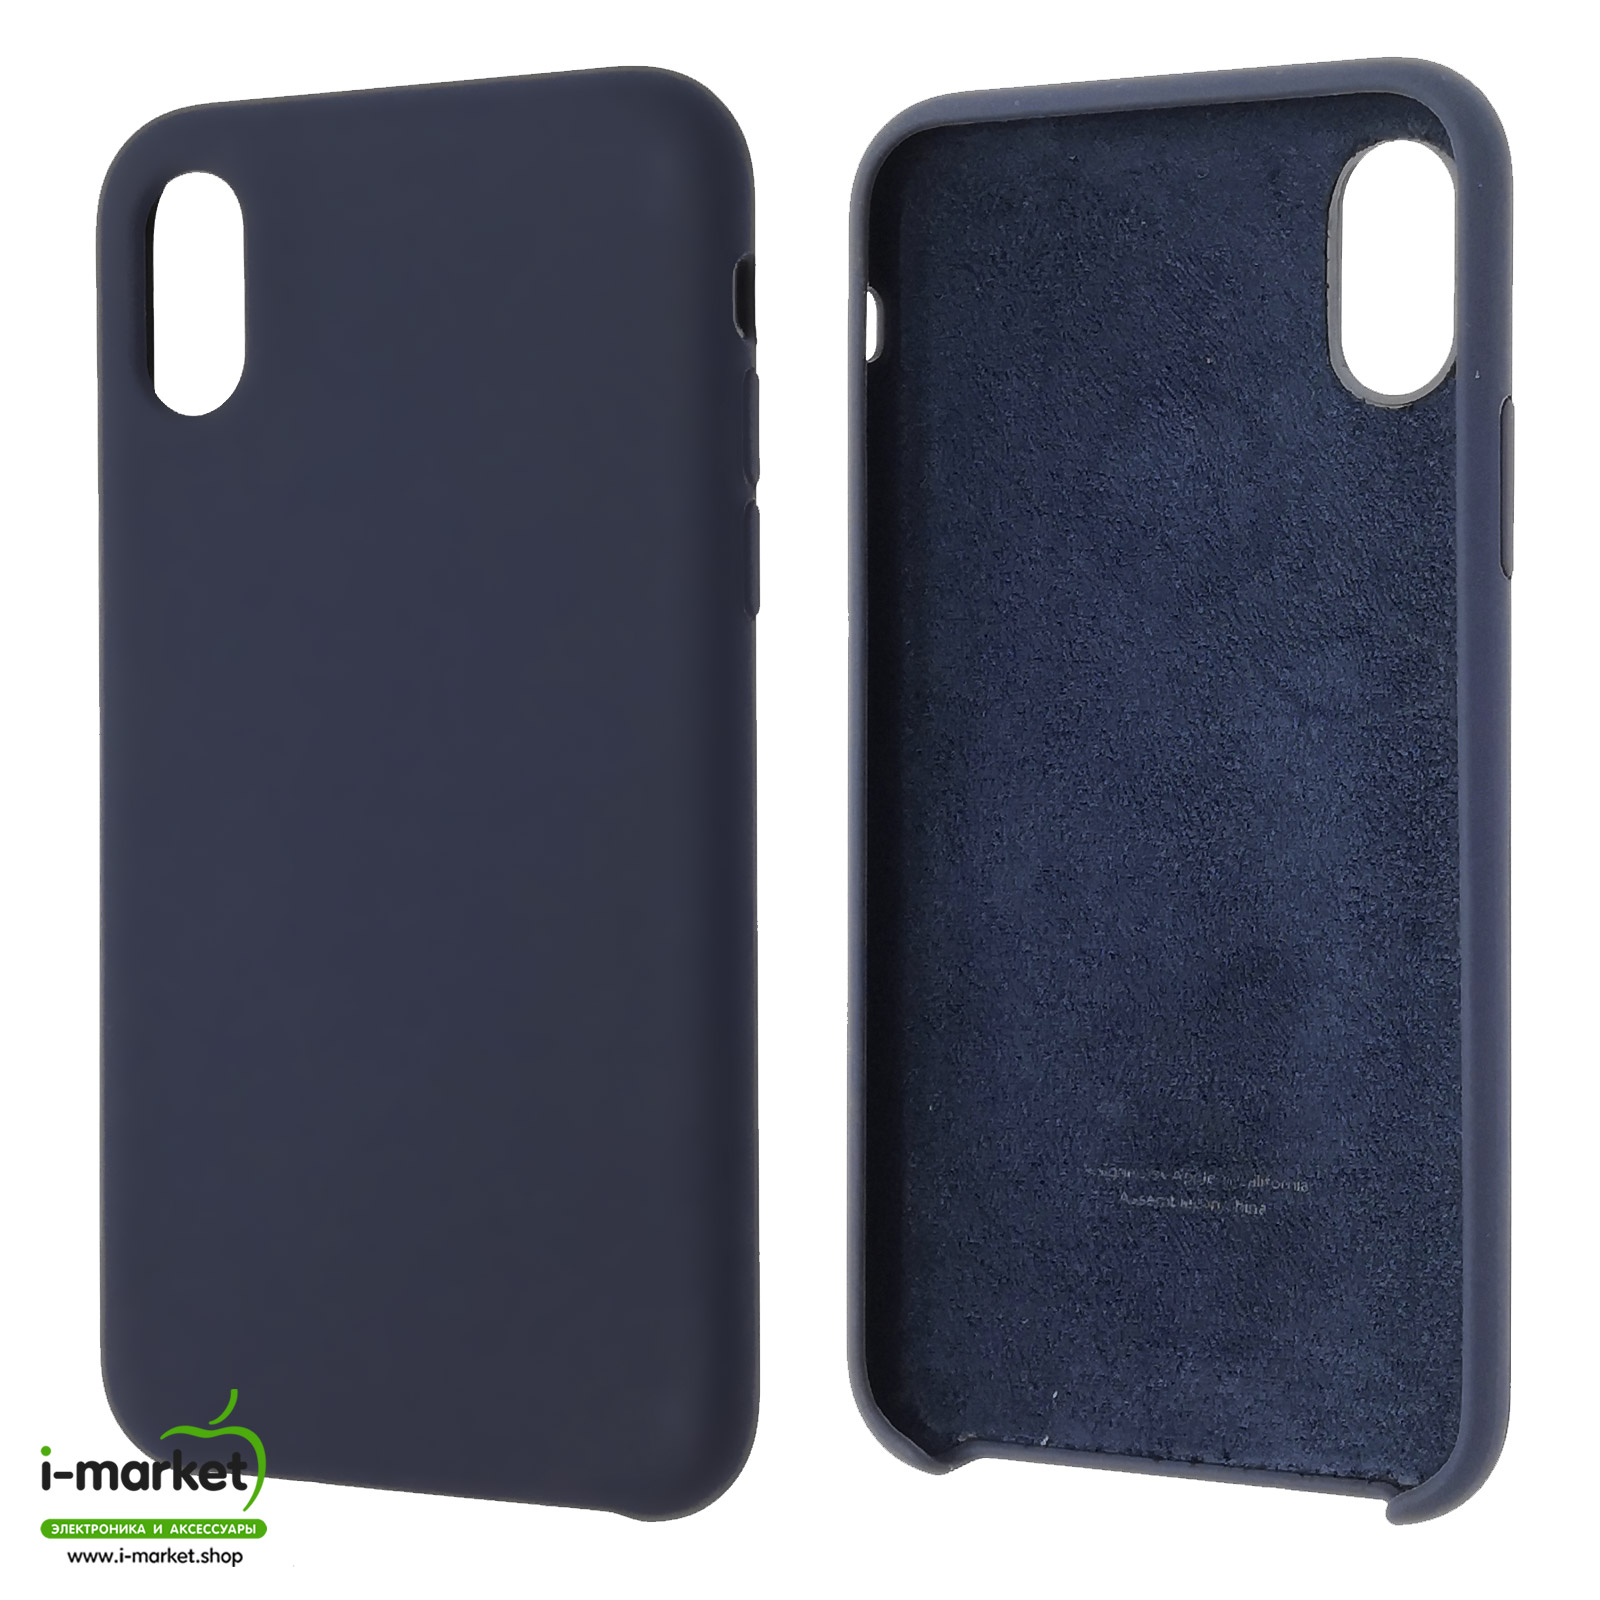 Чехол накладка Silicon Case для APPLE iPhone X, iPhone XS, силикон, бархат, цвет черно синий